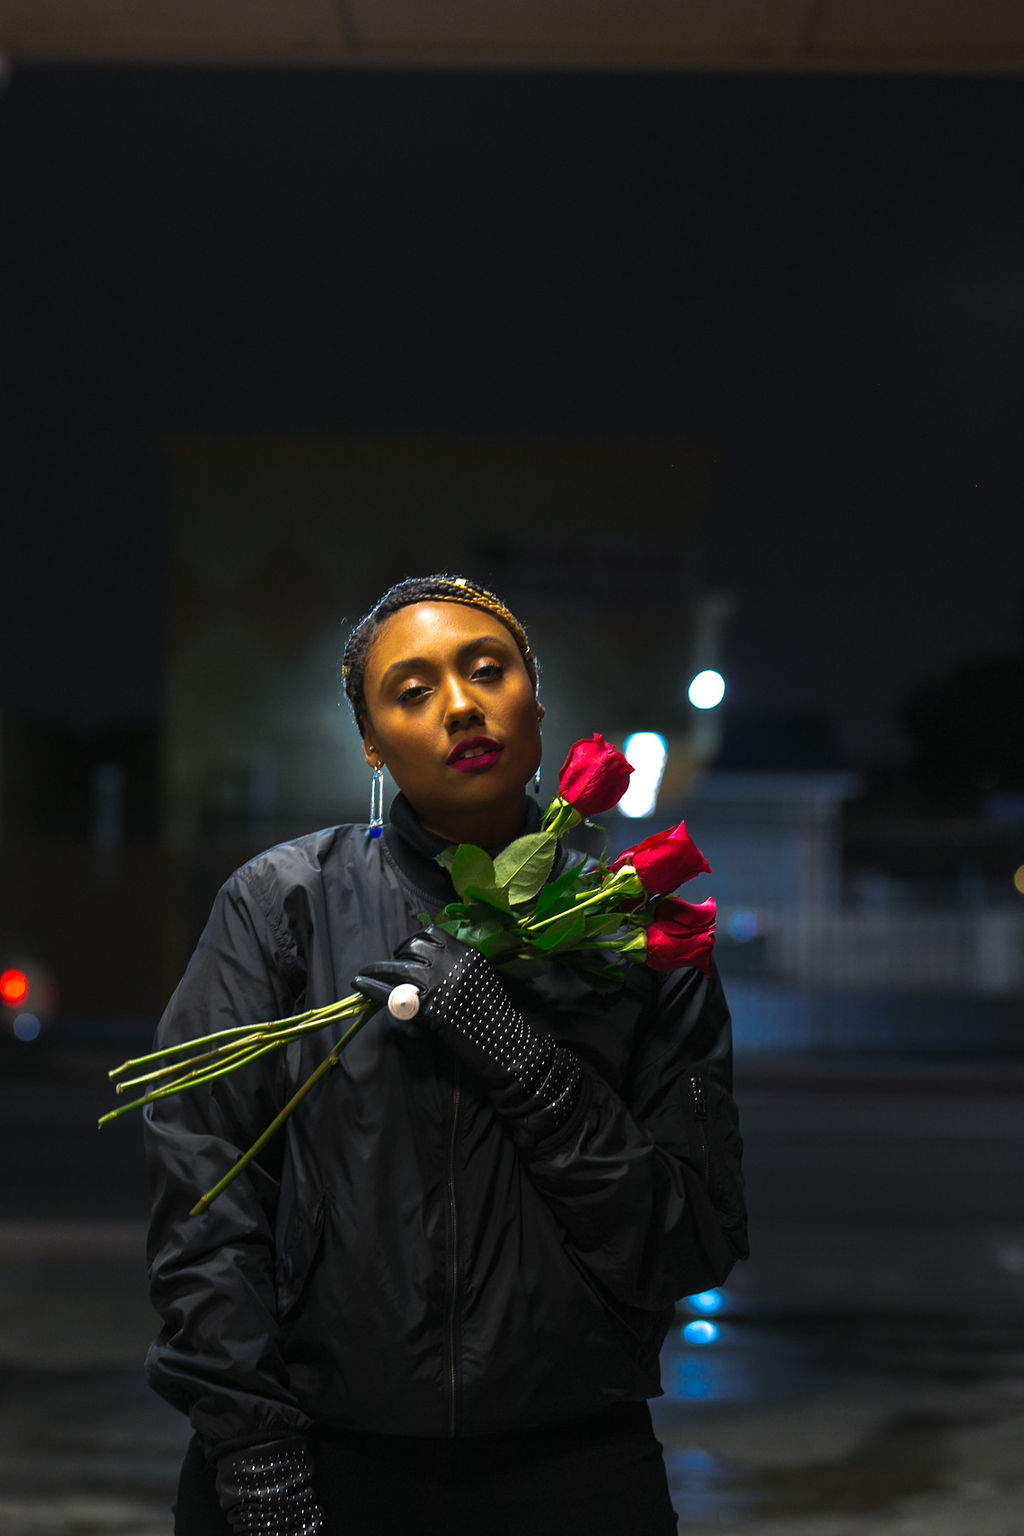 roses-night photography shoot